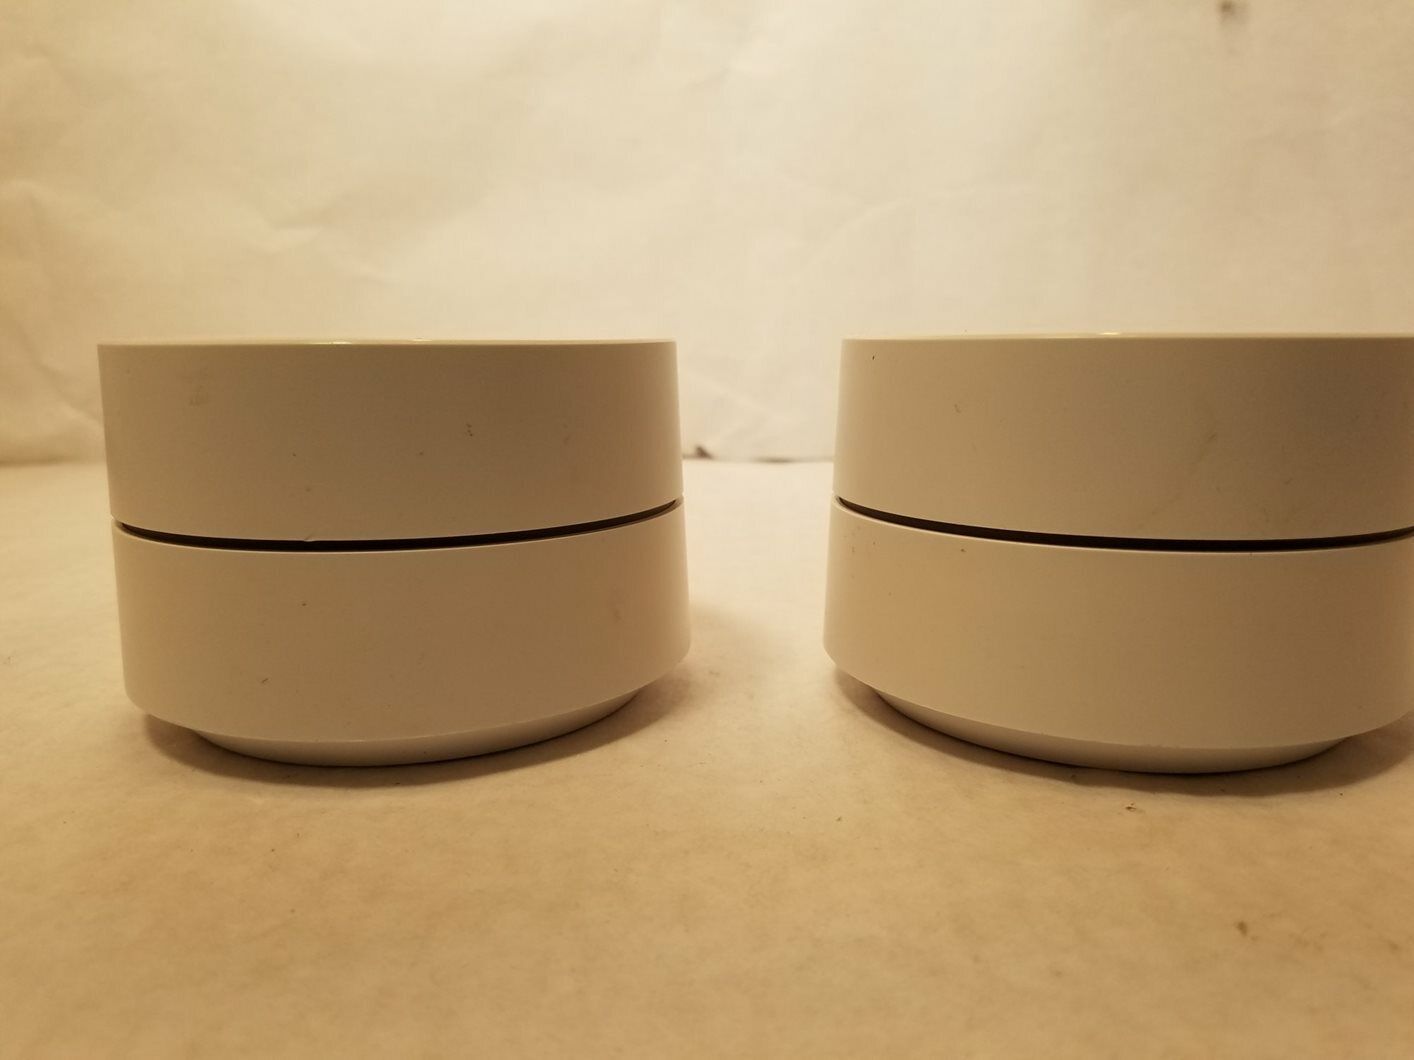 Lot of 2 Google WiFi AC1200 Dual-band Mesh Wi-fi Router - White